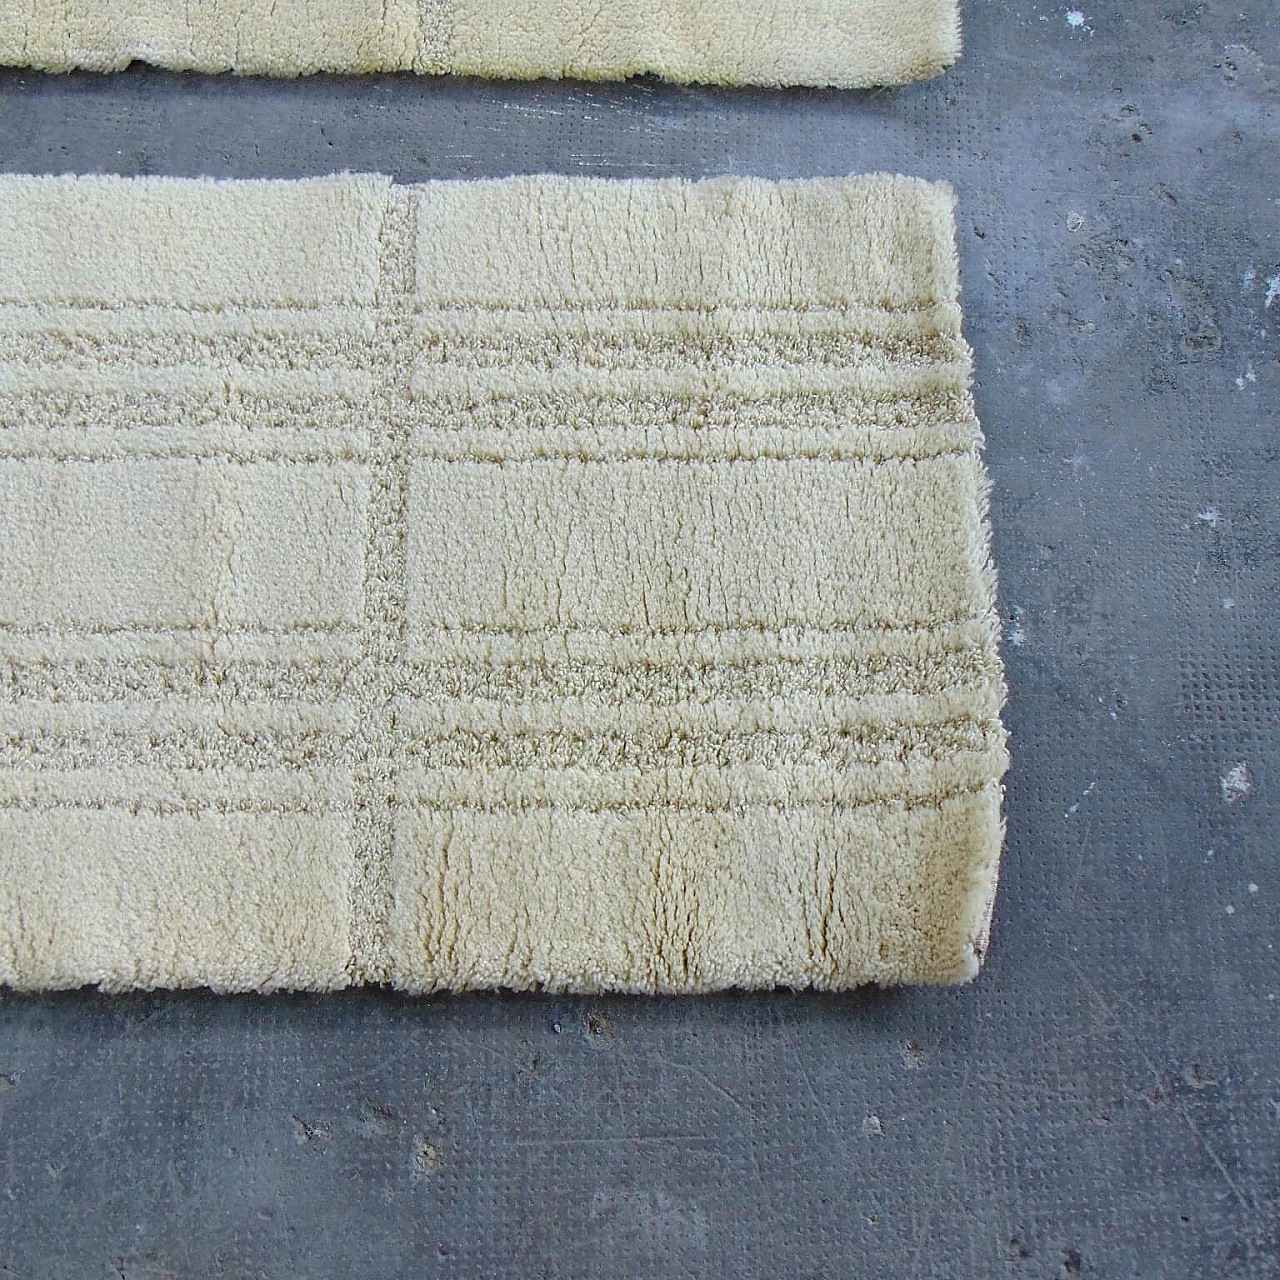 3 Tappeti danesi in pura lana vergine, tonalità crema, Eksport Hojer, anni '70 1069207